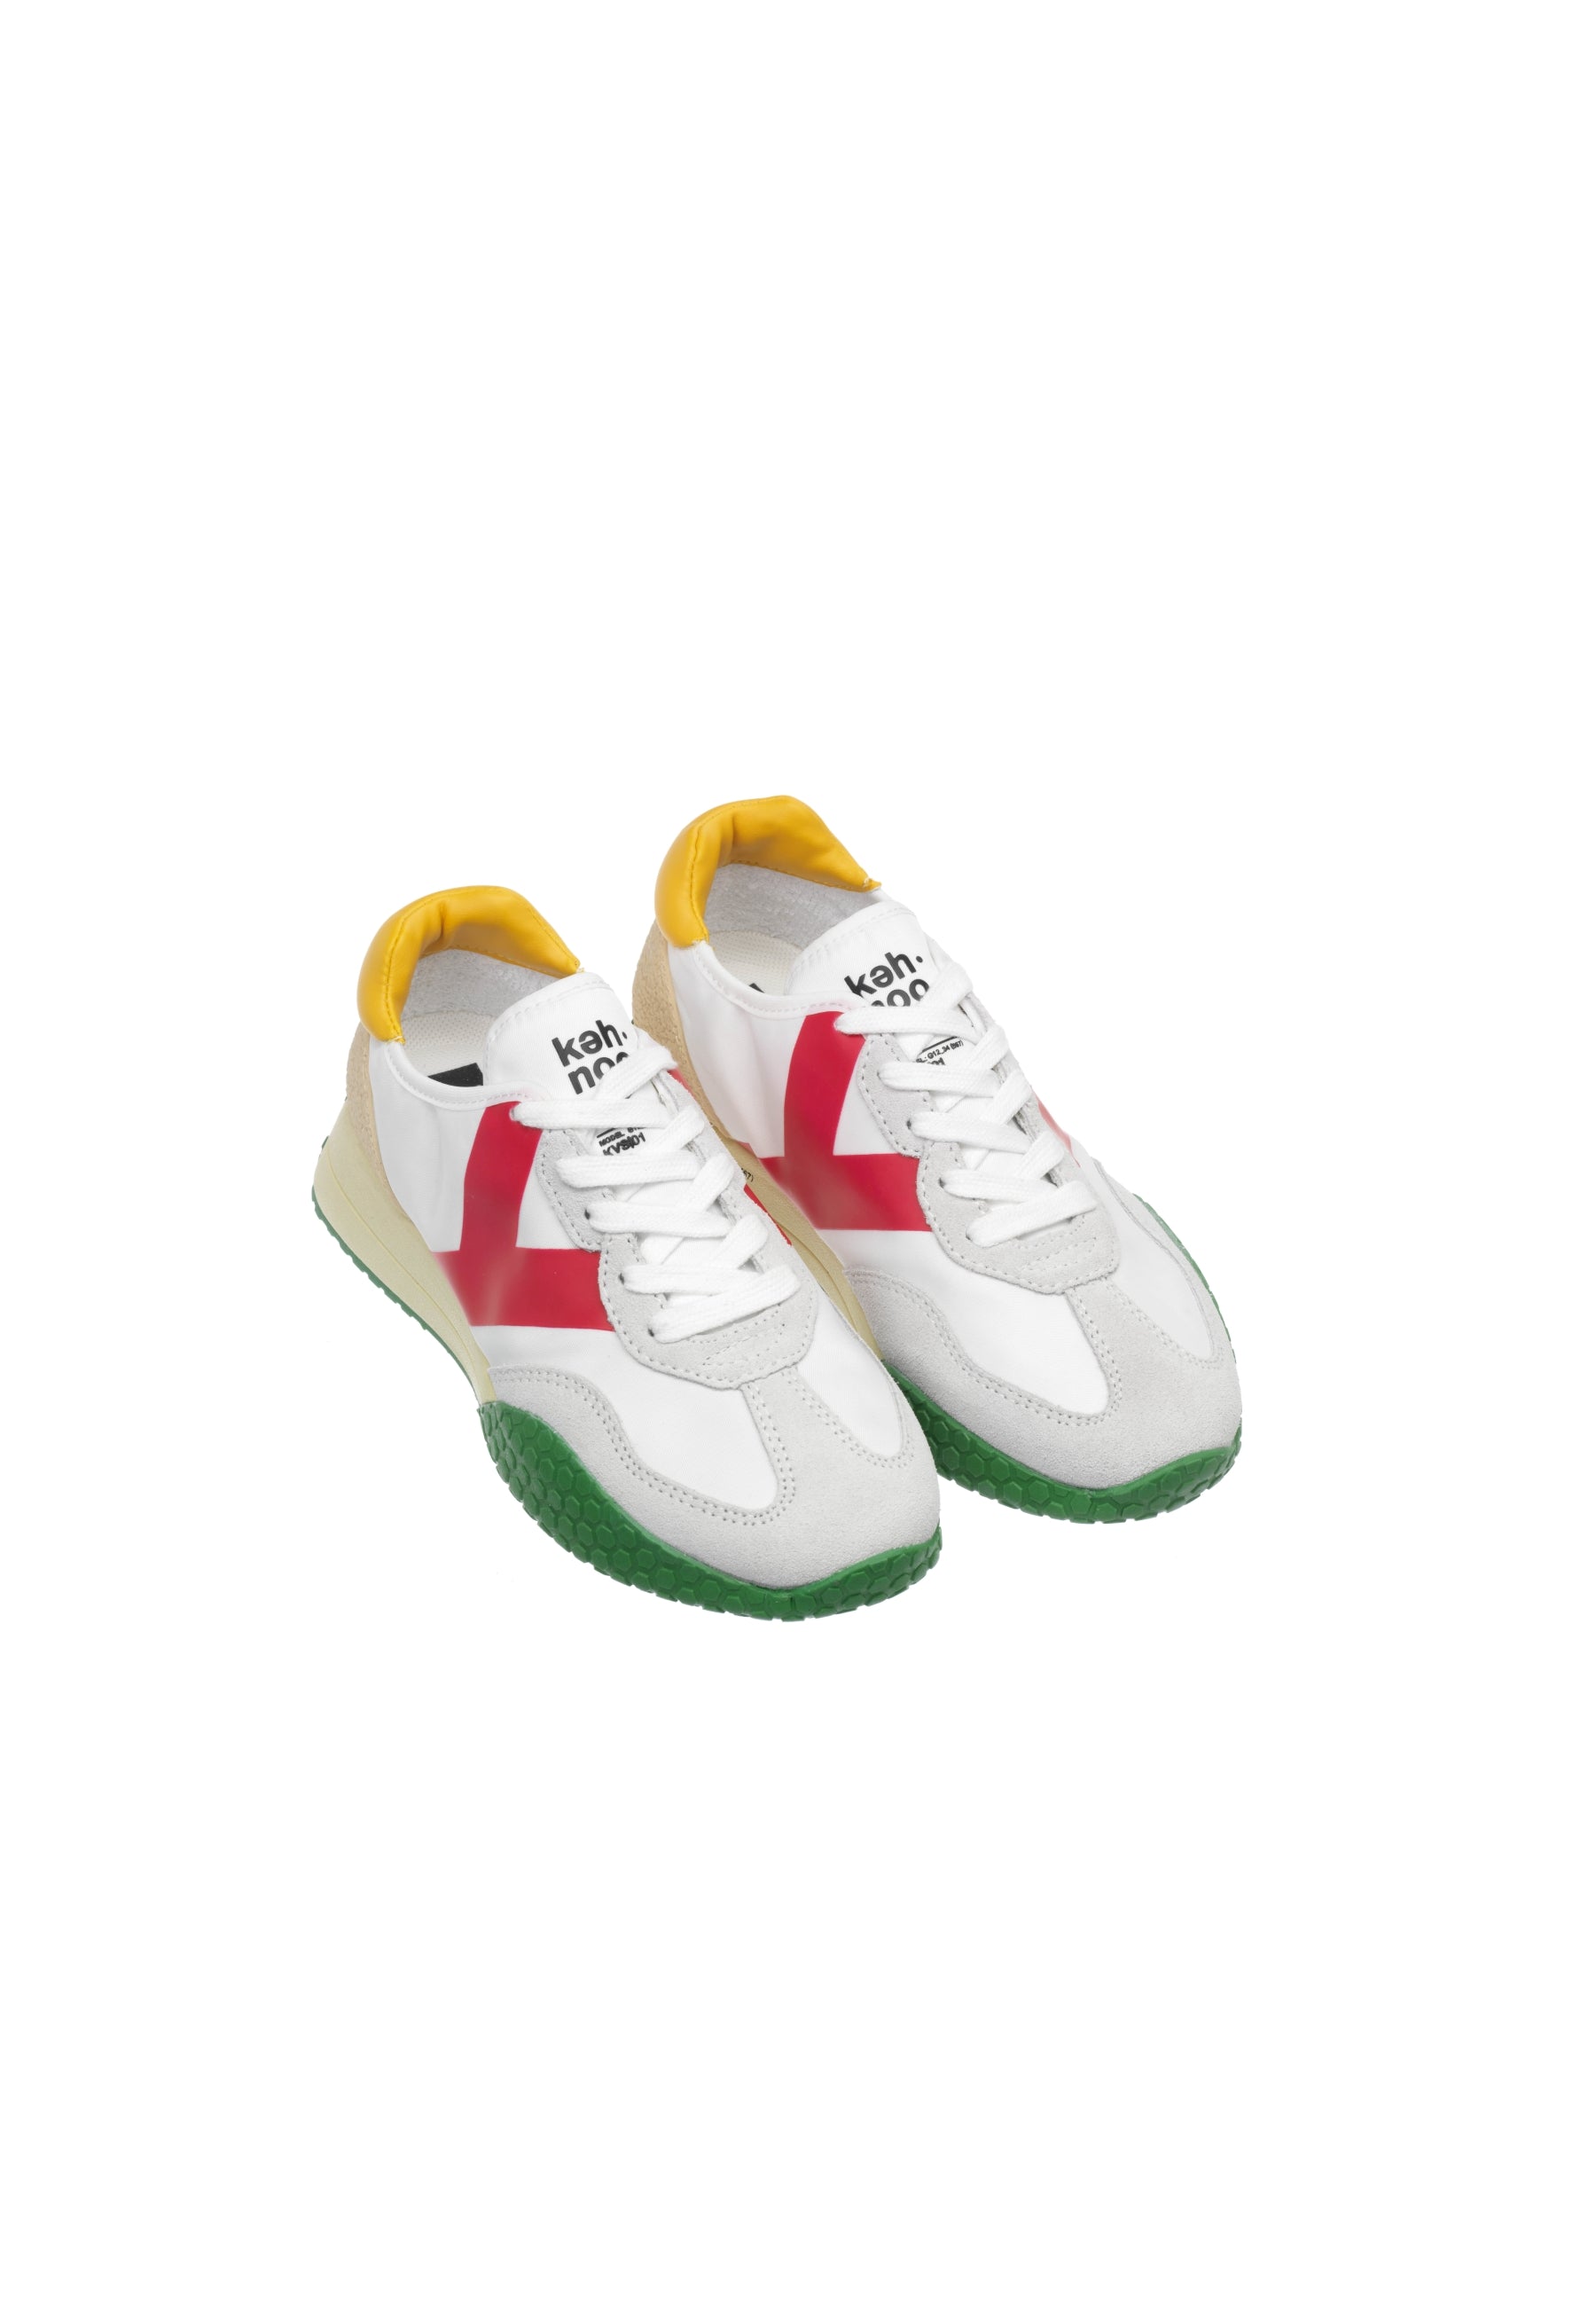 Ambassador in White/Fuxia/Yellow Sneakers Keh-Noo   